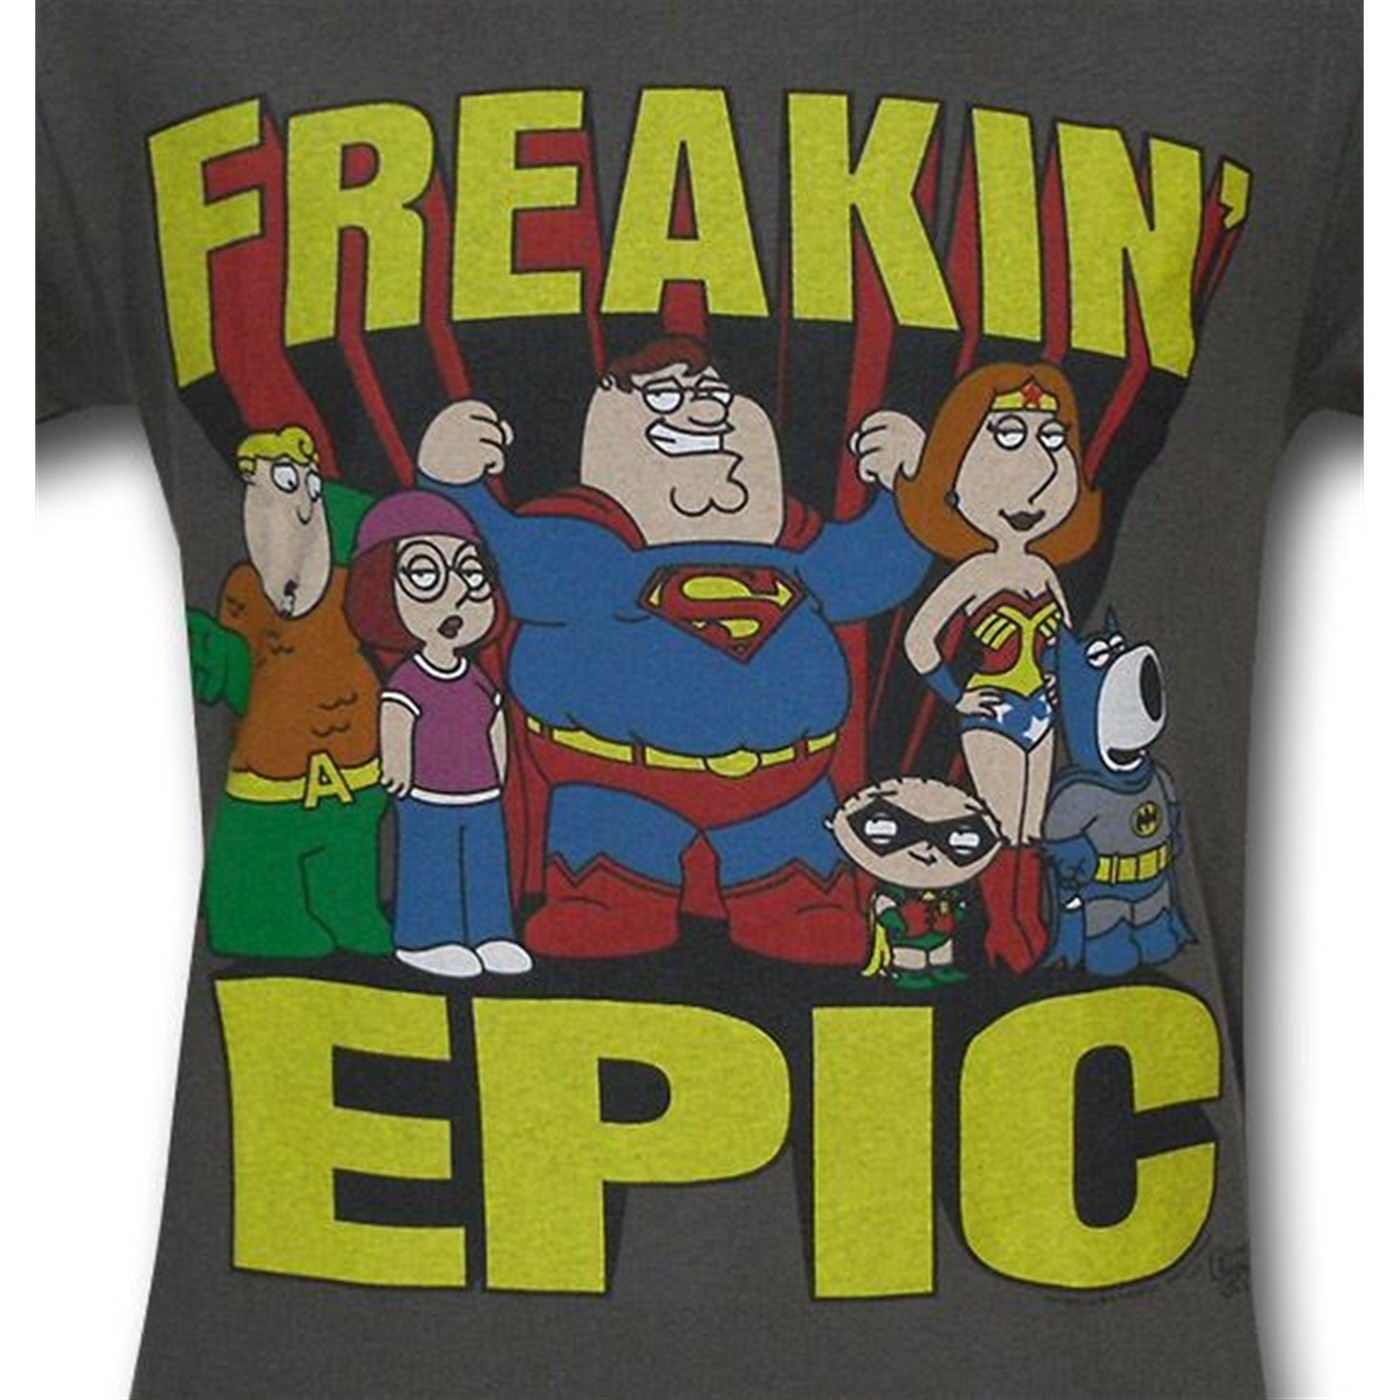 Family Guy Freakin' Epic Superhero T-Shirt